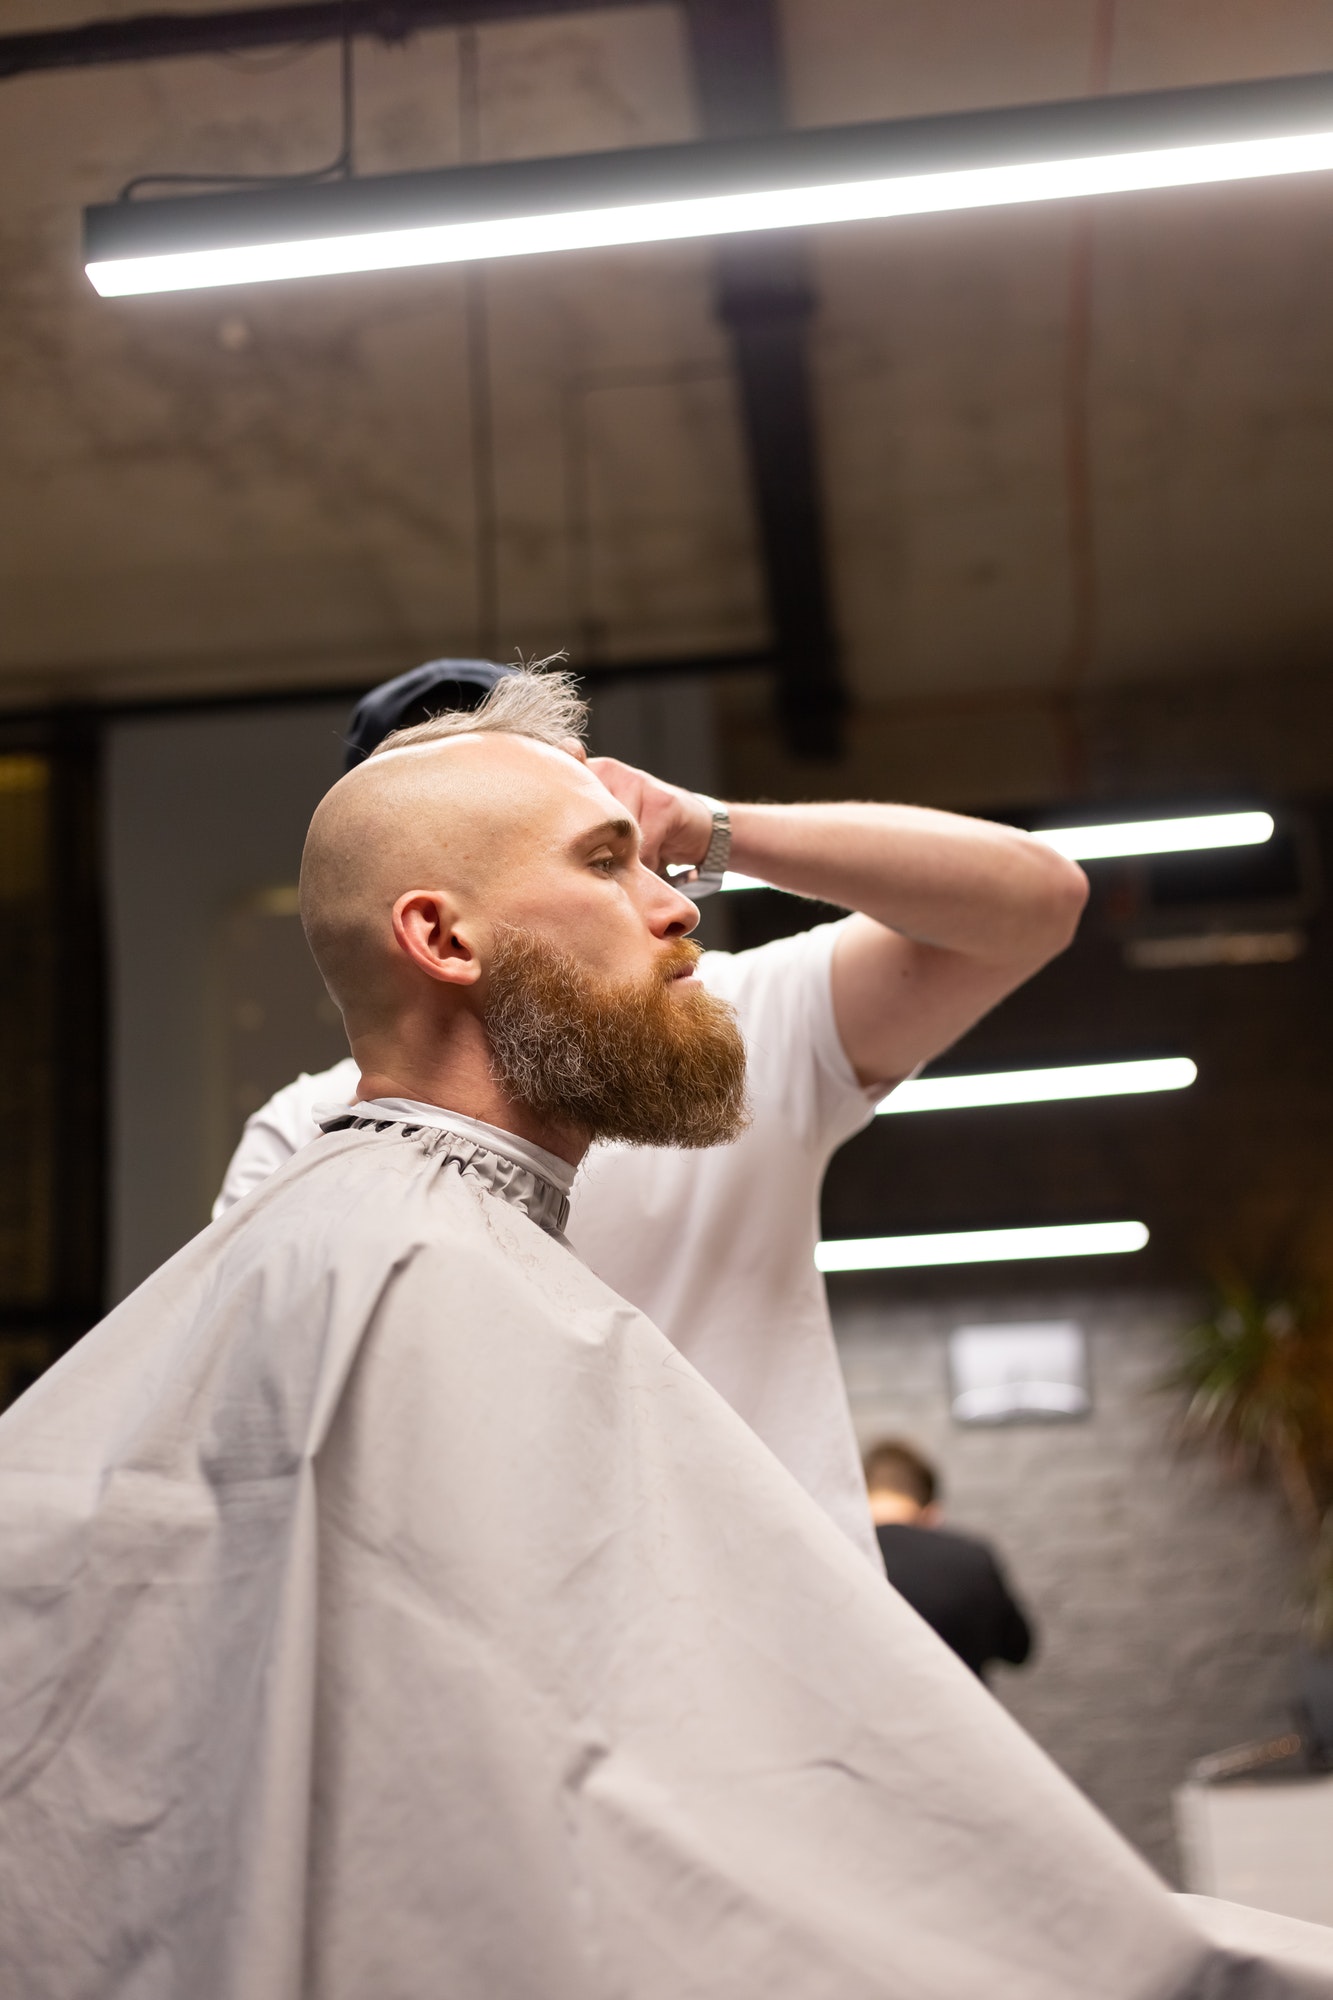 European brutal man with a beard cut in a barbershop